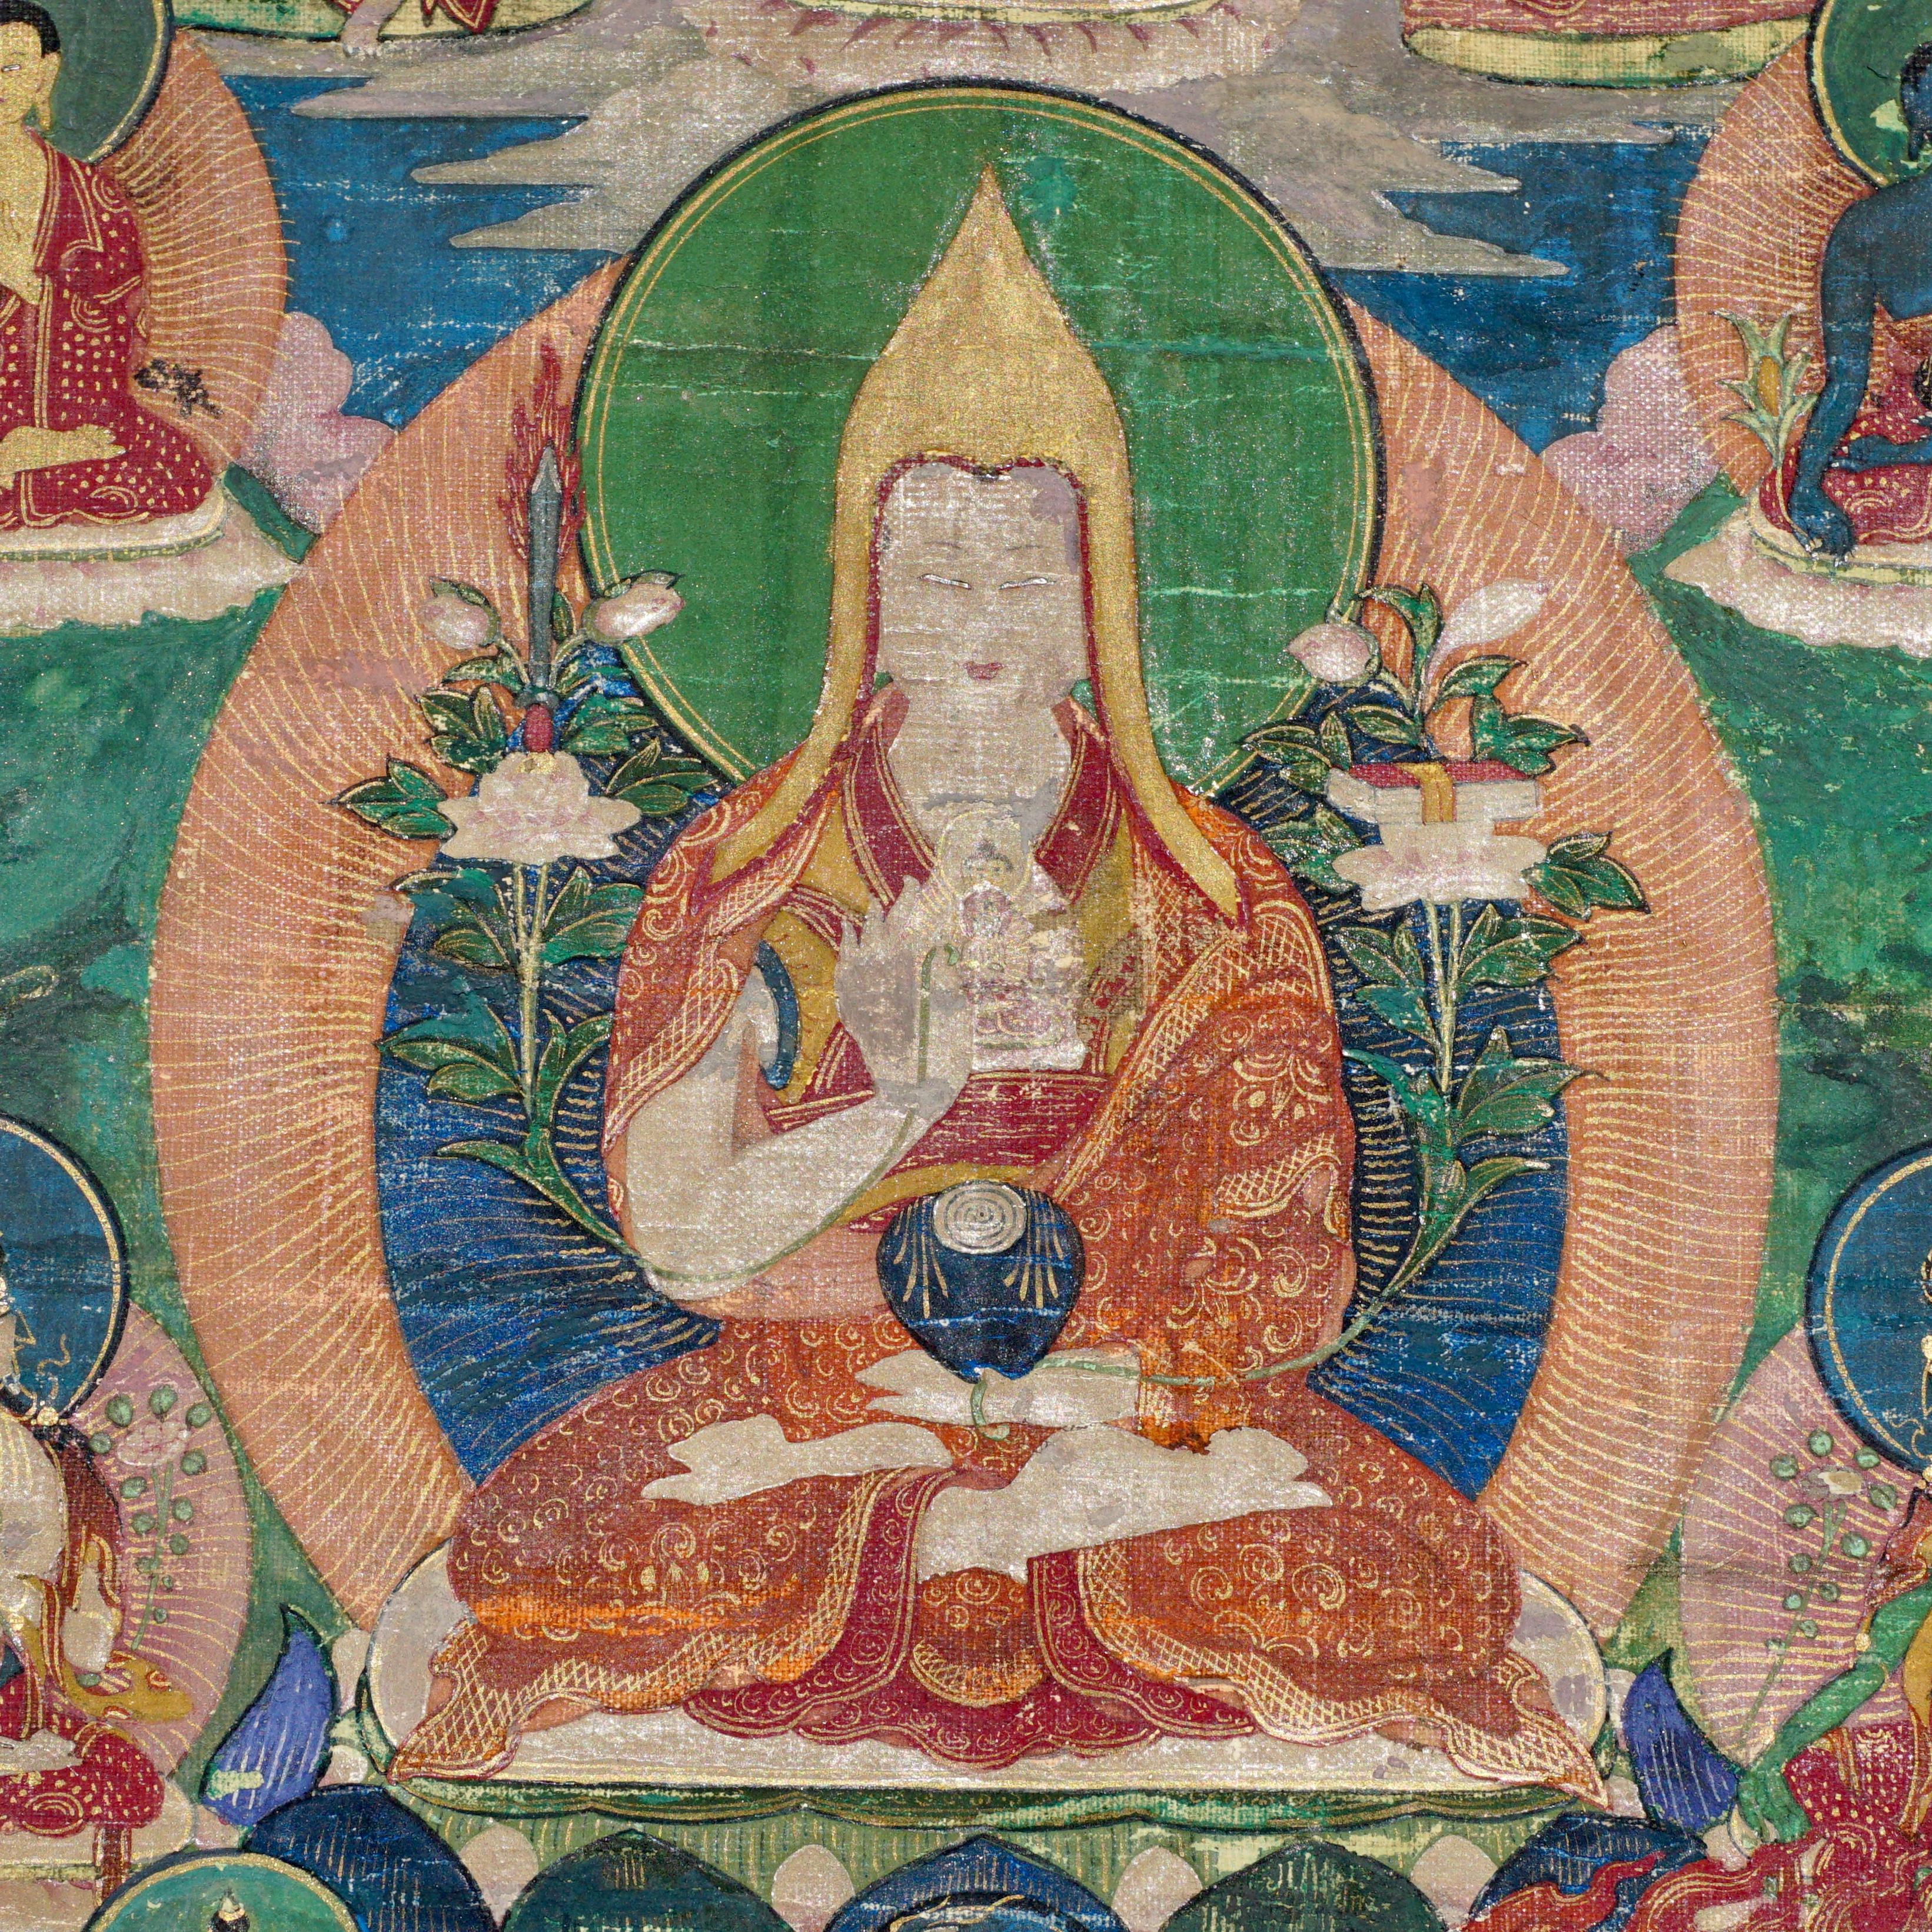 Hand-Painted Tibetan Thangka Of Tsongkhapa, 18th Century